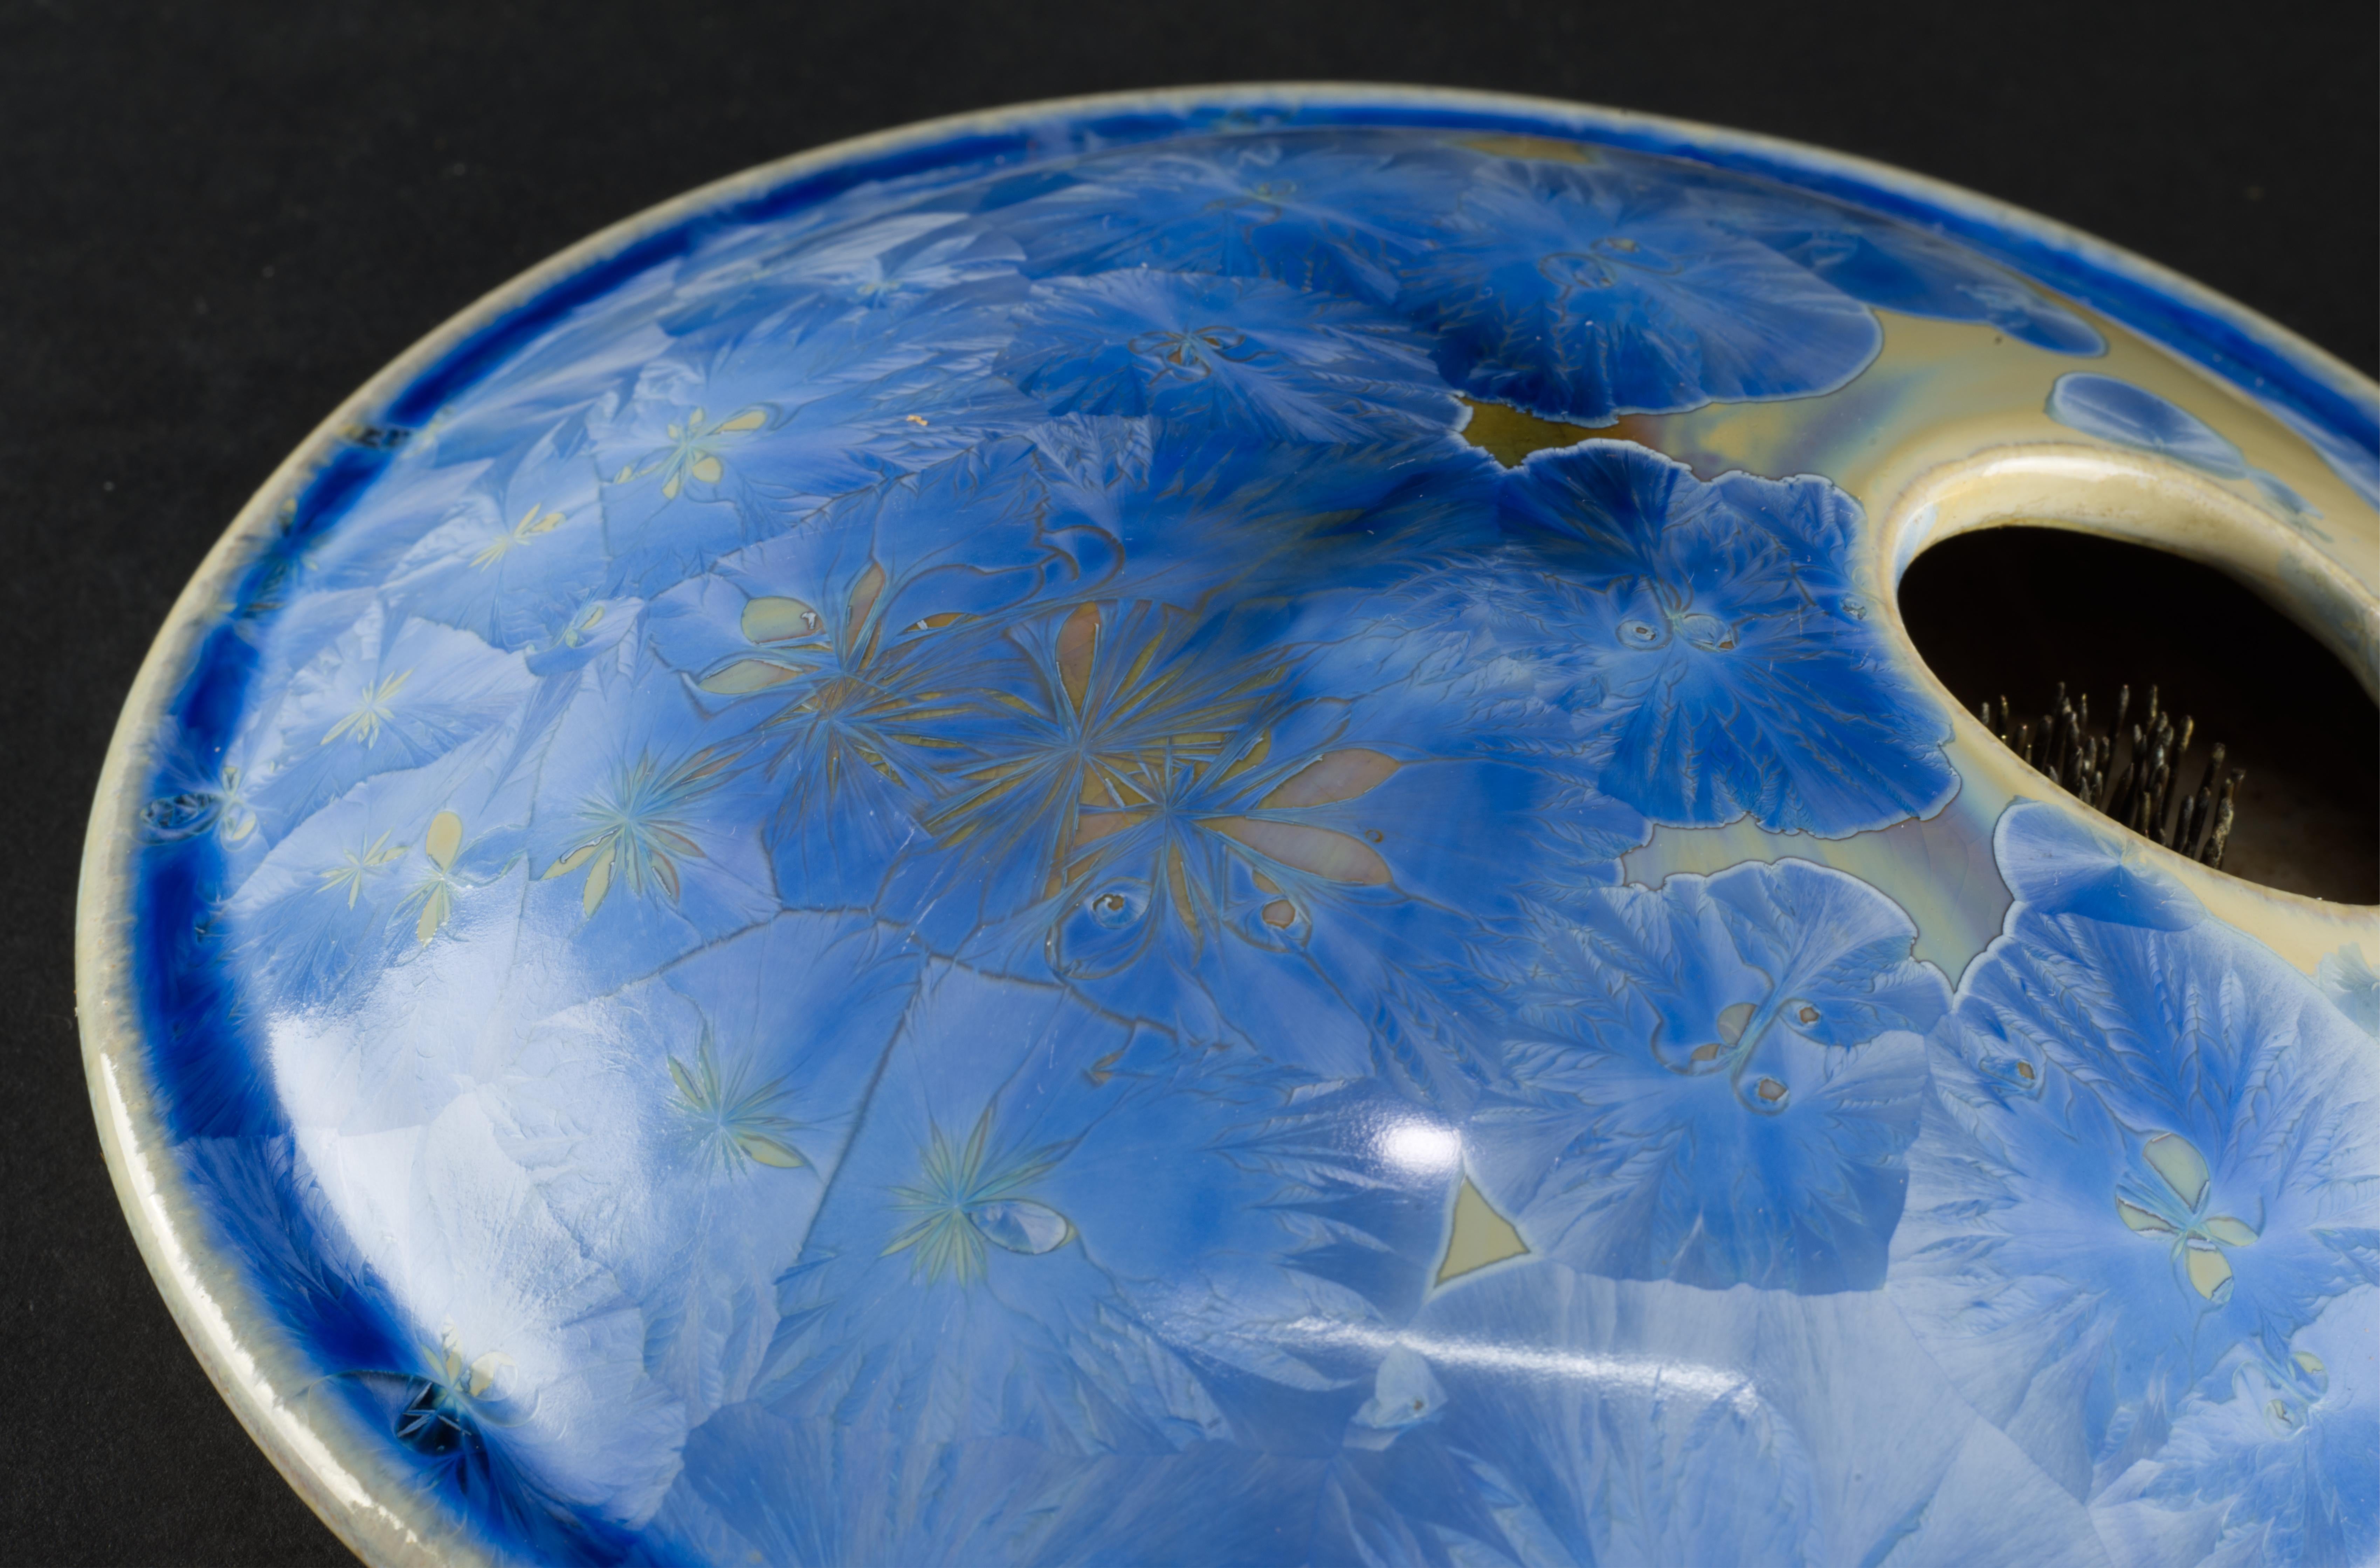 Crystalline Glaze Ceramic Ikebana Vase, Blue, American Studio Pottery, 2003 For Sale 4